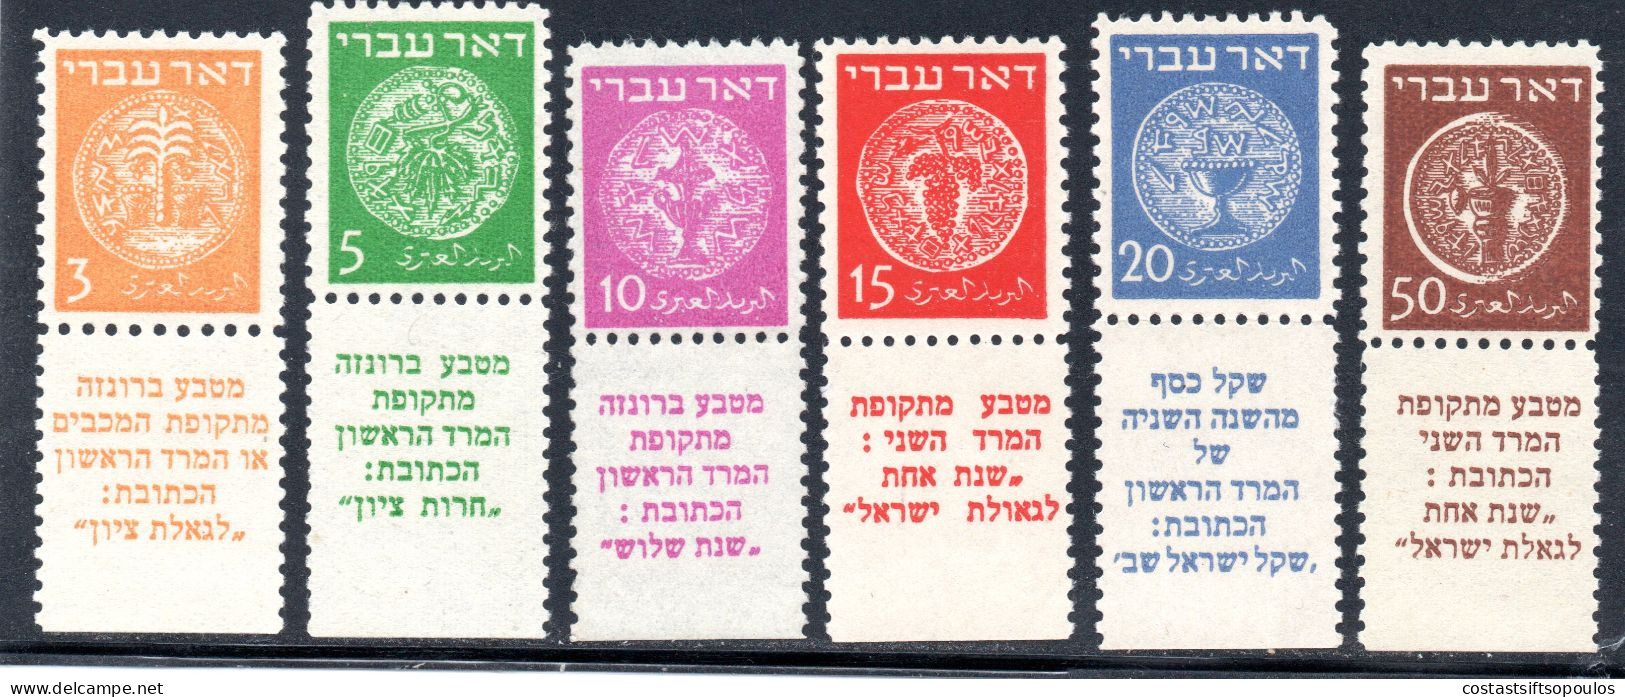 1502.ISRAEL 1948 DOAR IVRI(COINS) #1-9 MNH,SIGNED DIENNA ,URY SHALIT CERTIFICATE - Ongebruikt (met Tabs)